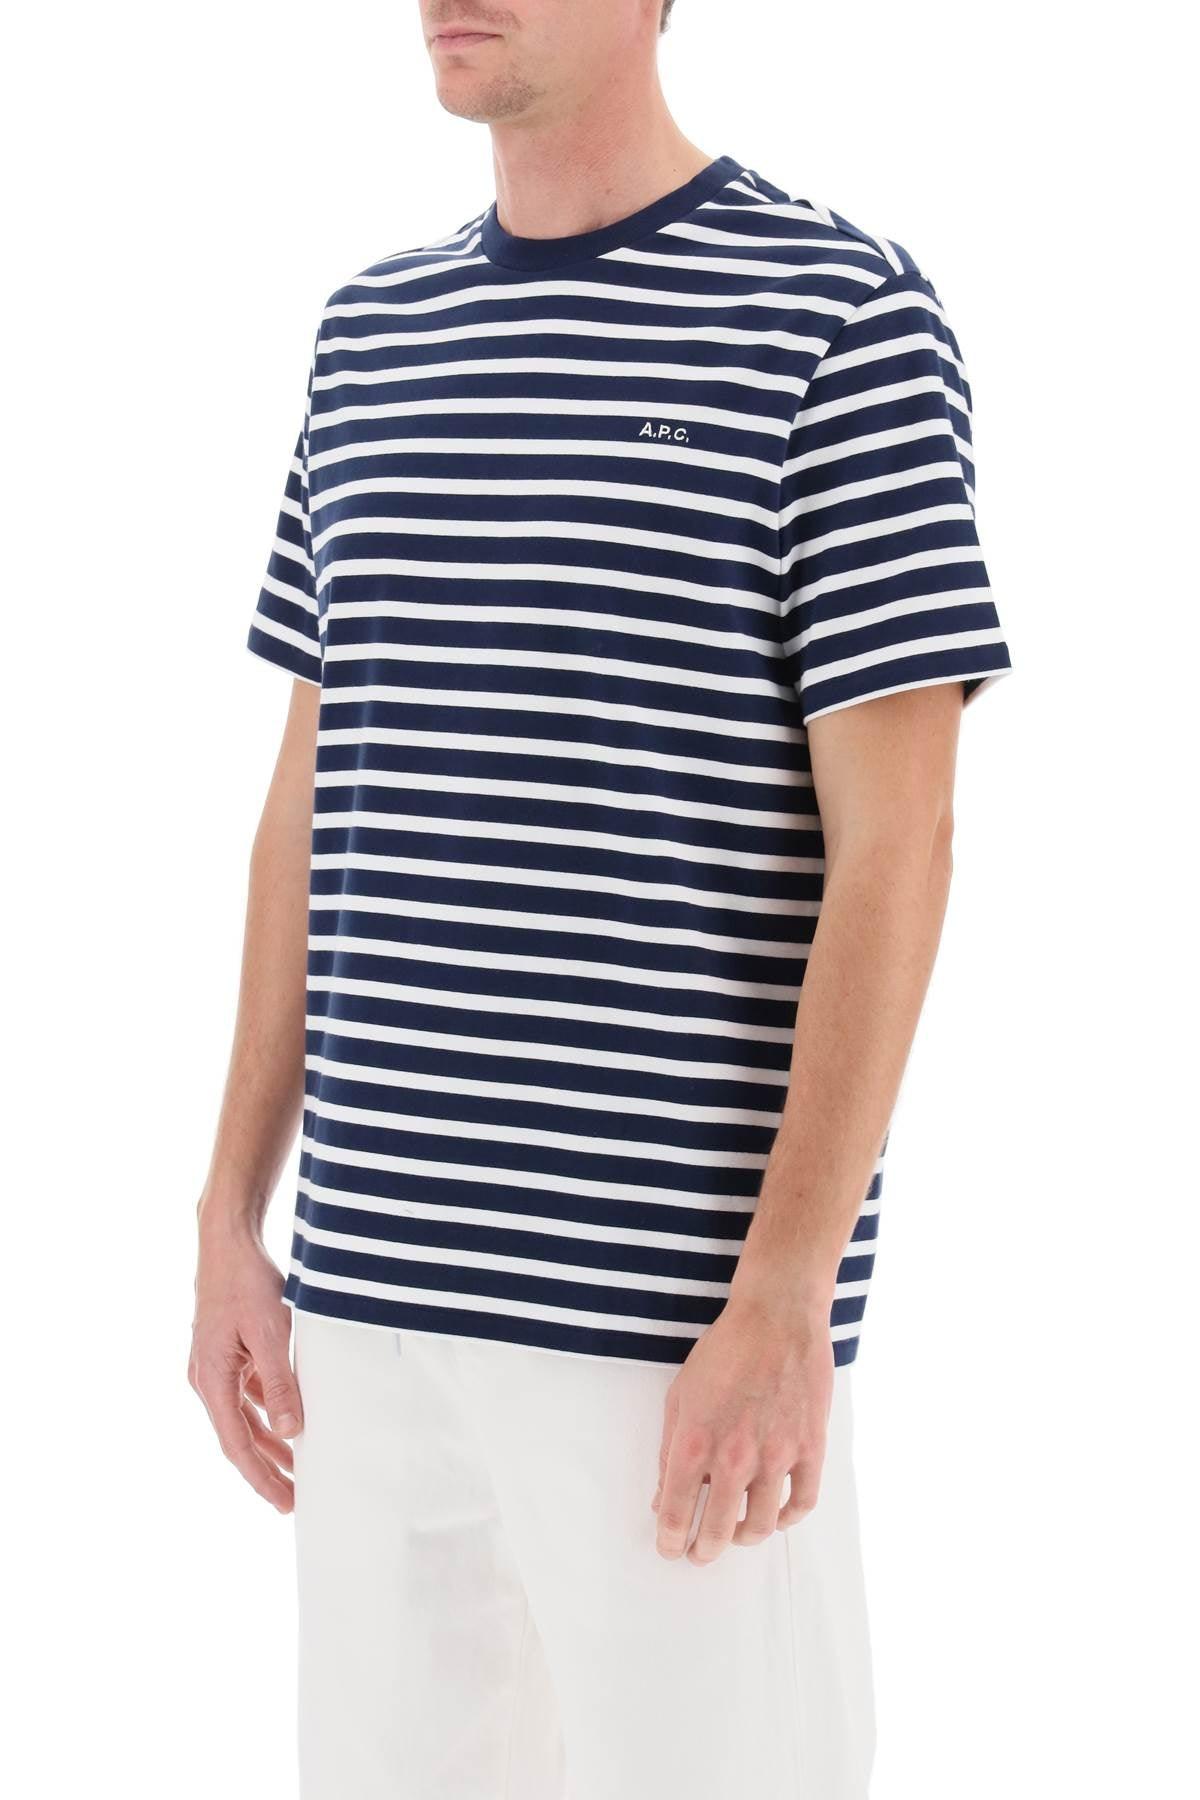 A.P.C. Emilien Striped T Shirt - JOHN JULIA